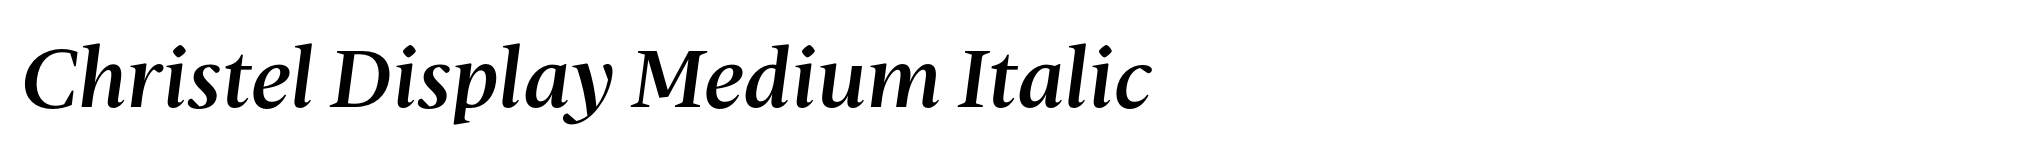 Christel Display Medium Italic image